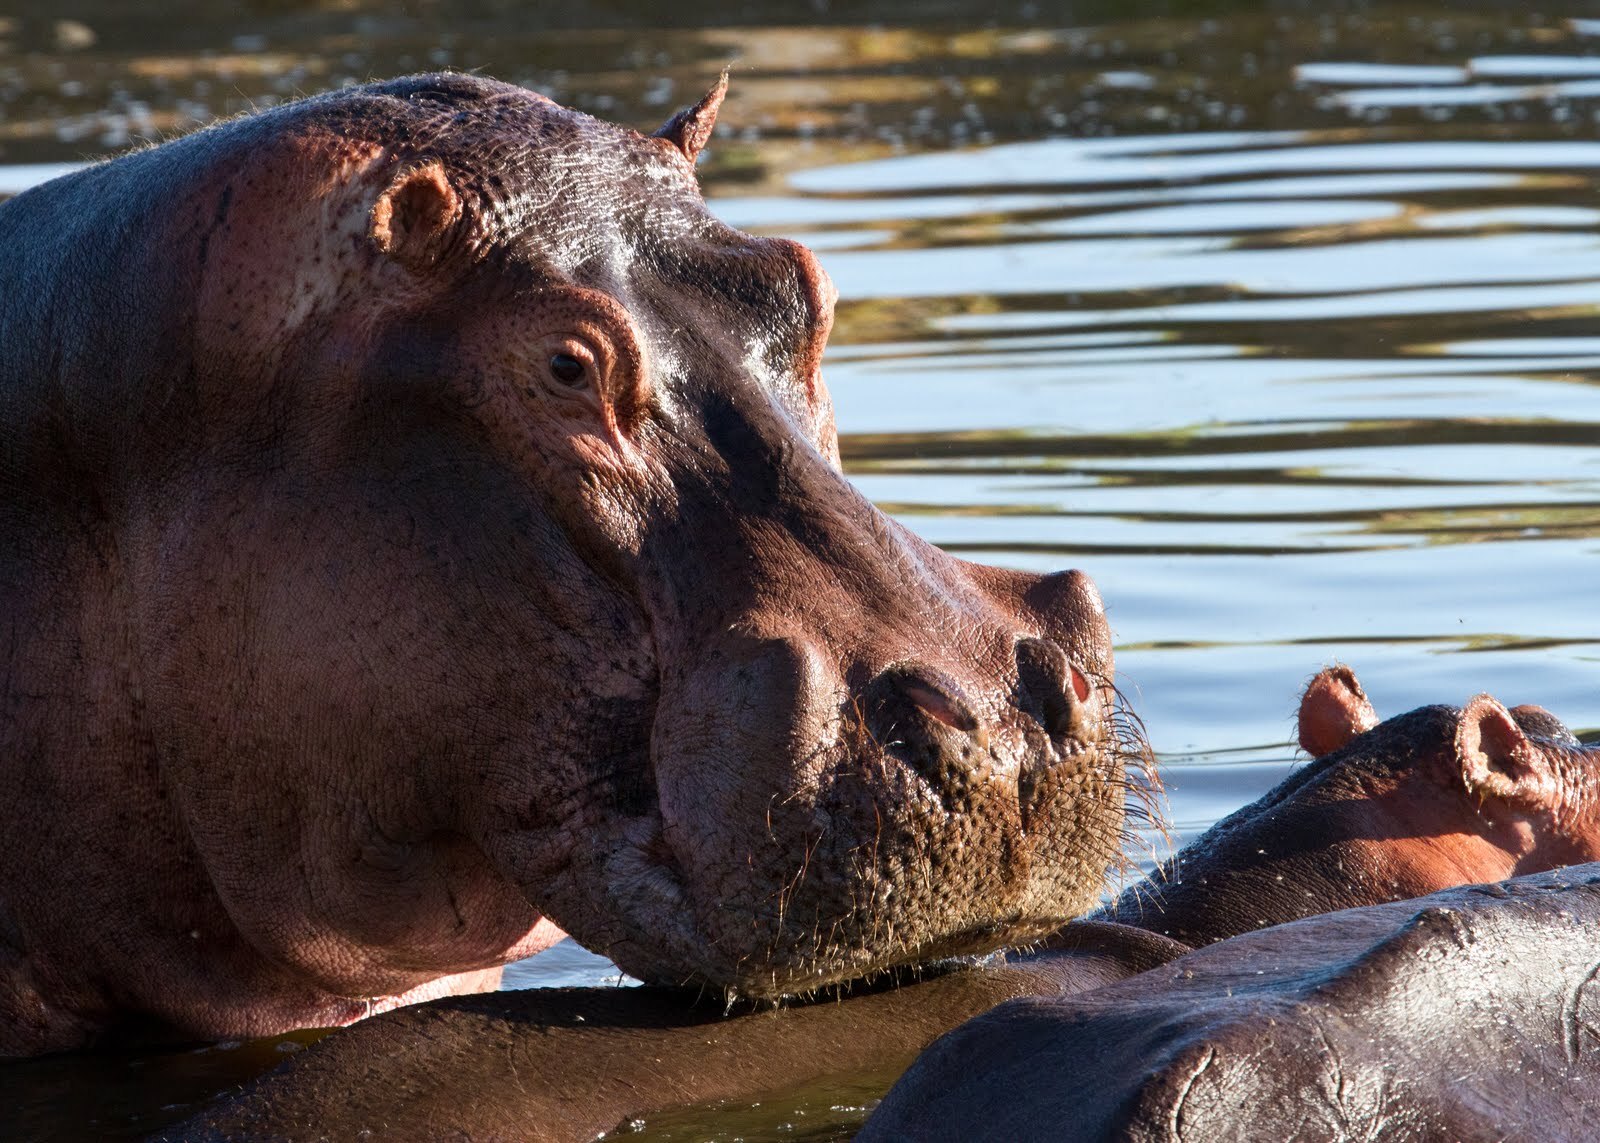 Hippos in Ruaha National Park, Tanzania. Image credit: Courtesy of Grégoire Dubois